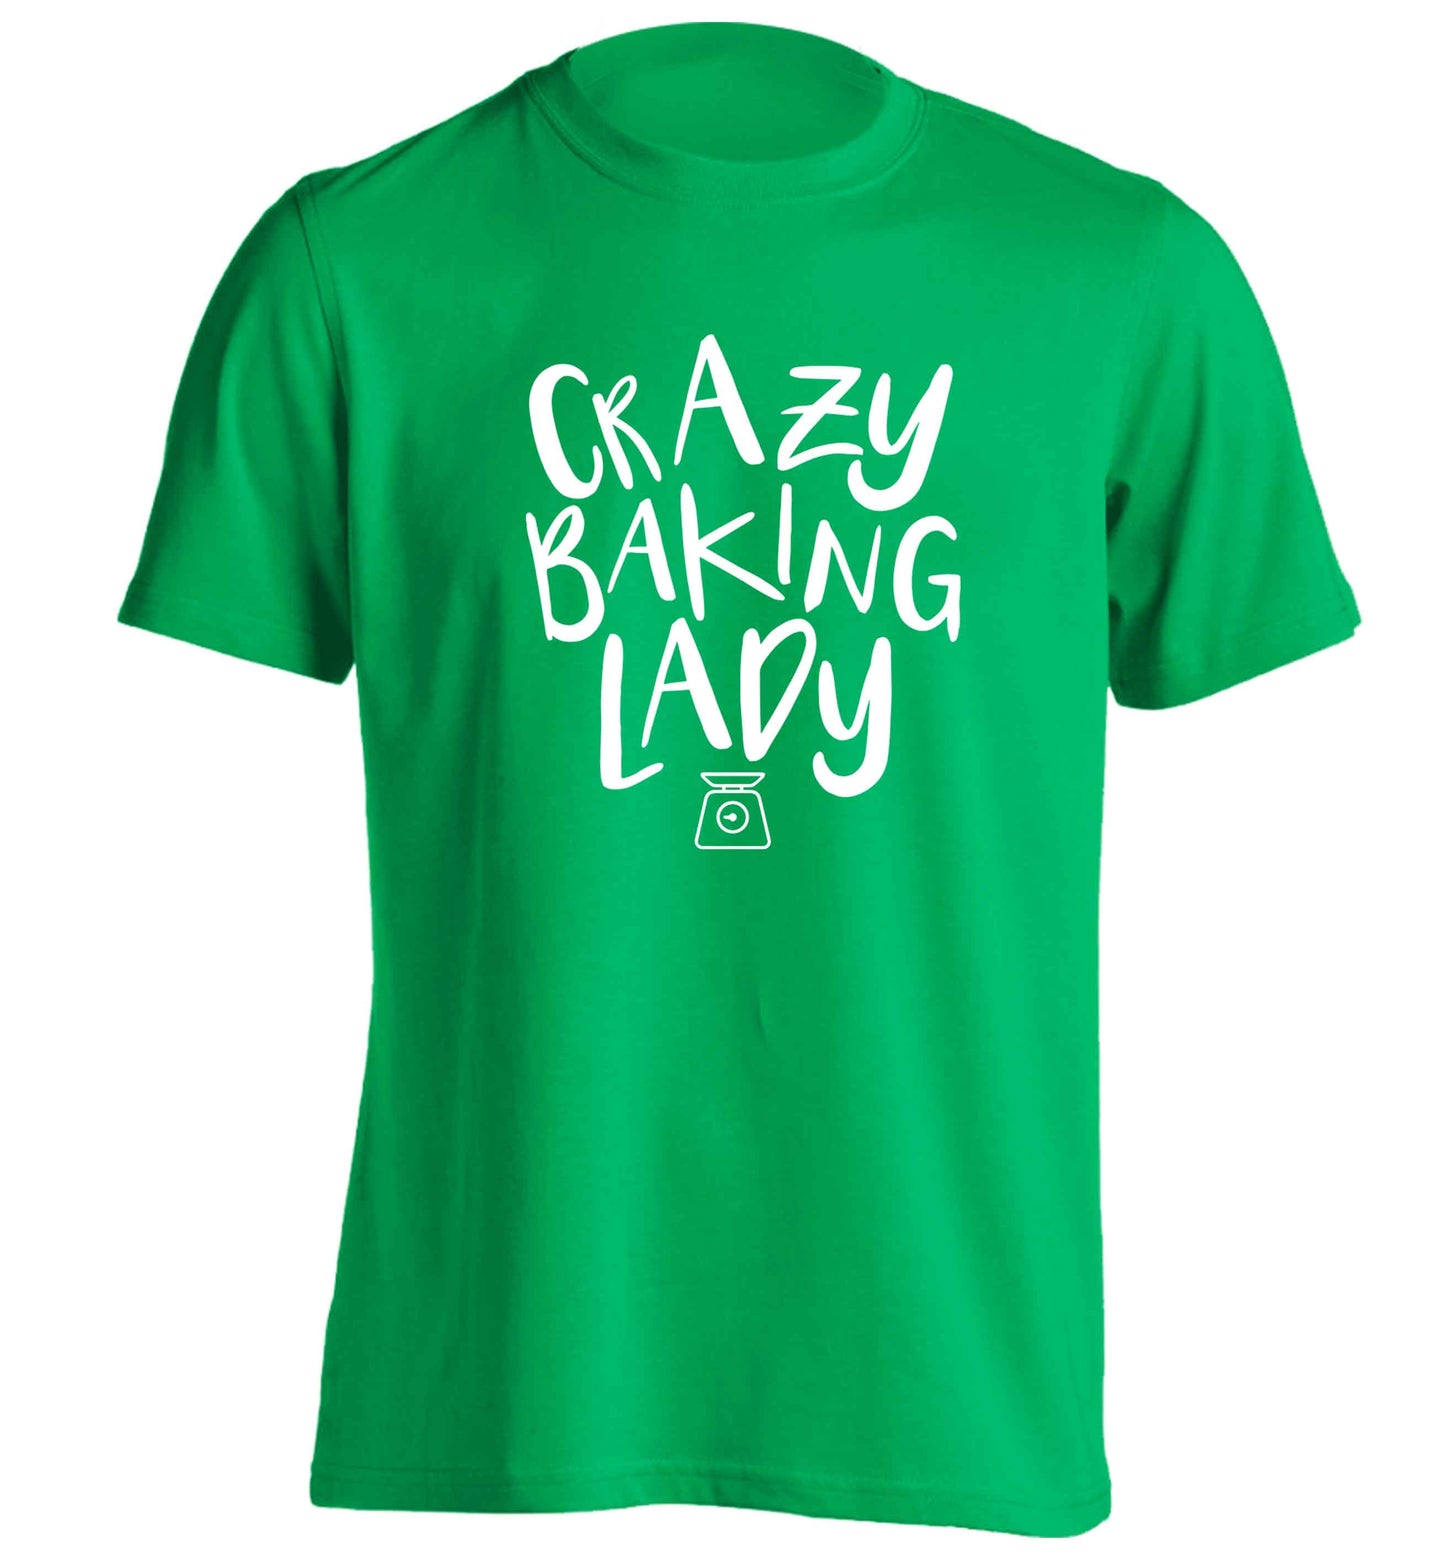 Crazy baking lady adults unisex green Tshirt 2XL